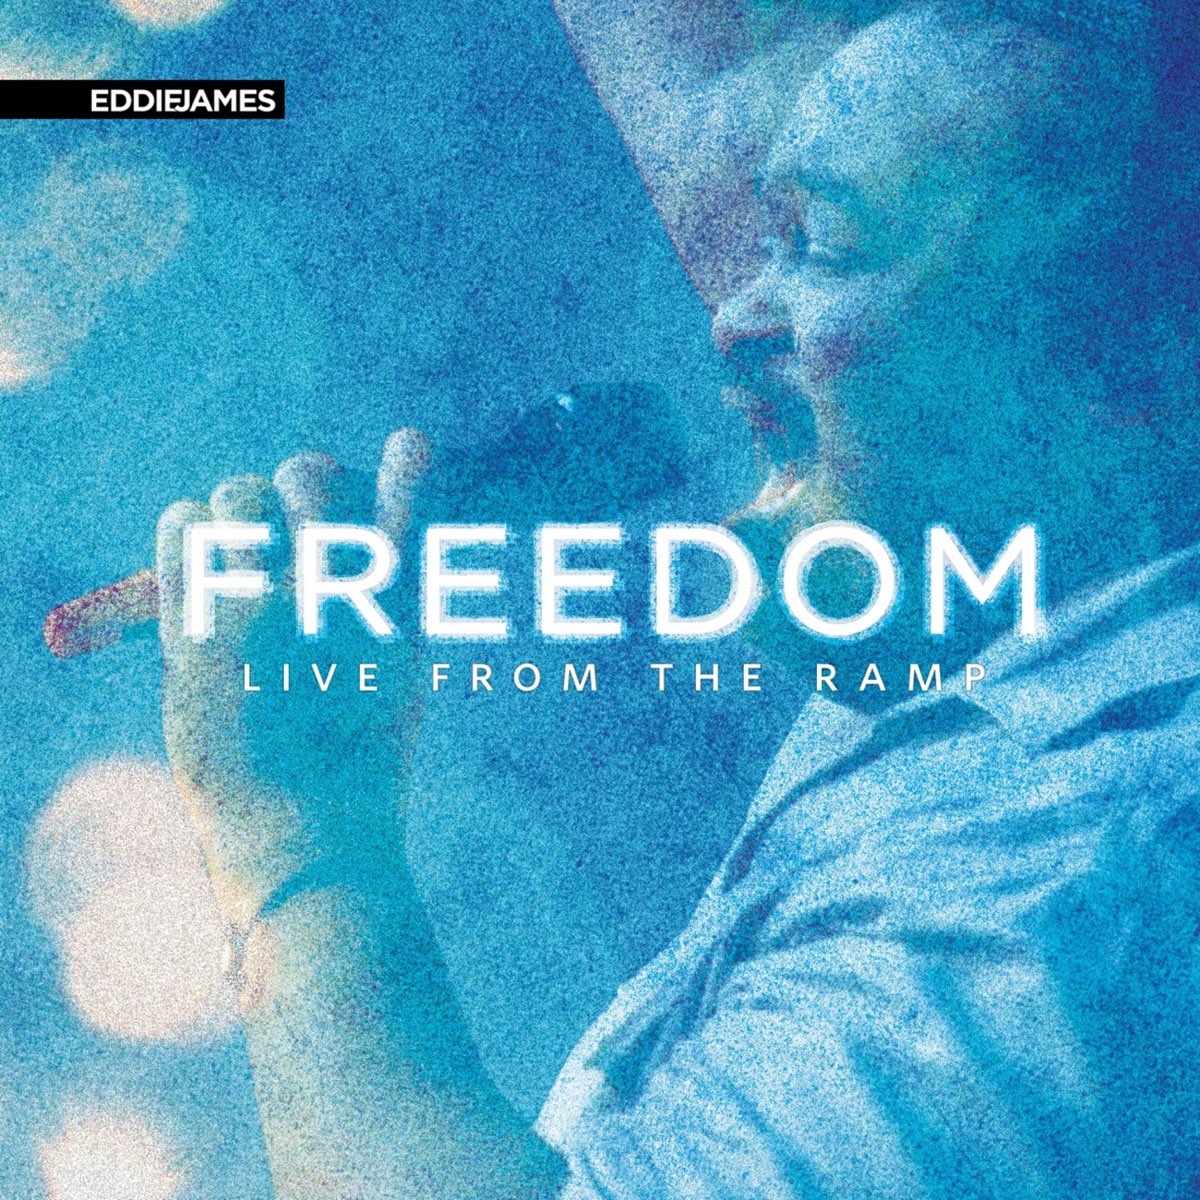 ‎freedom Single By Eddie James On Apple Music